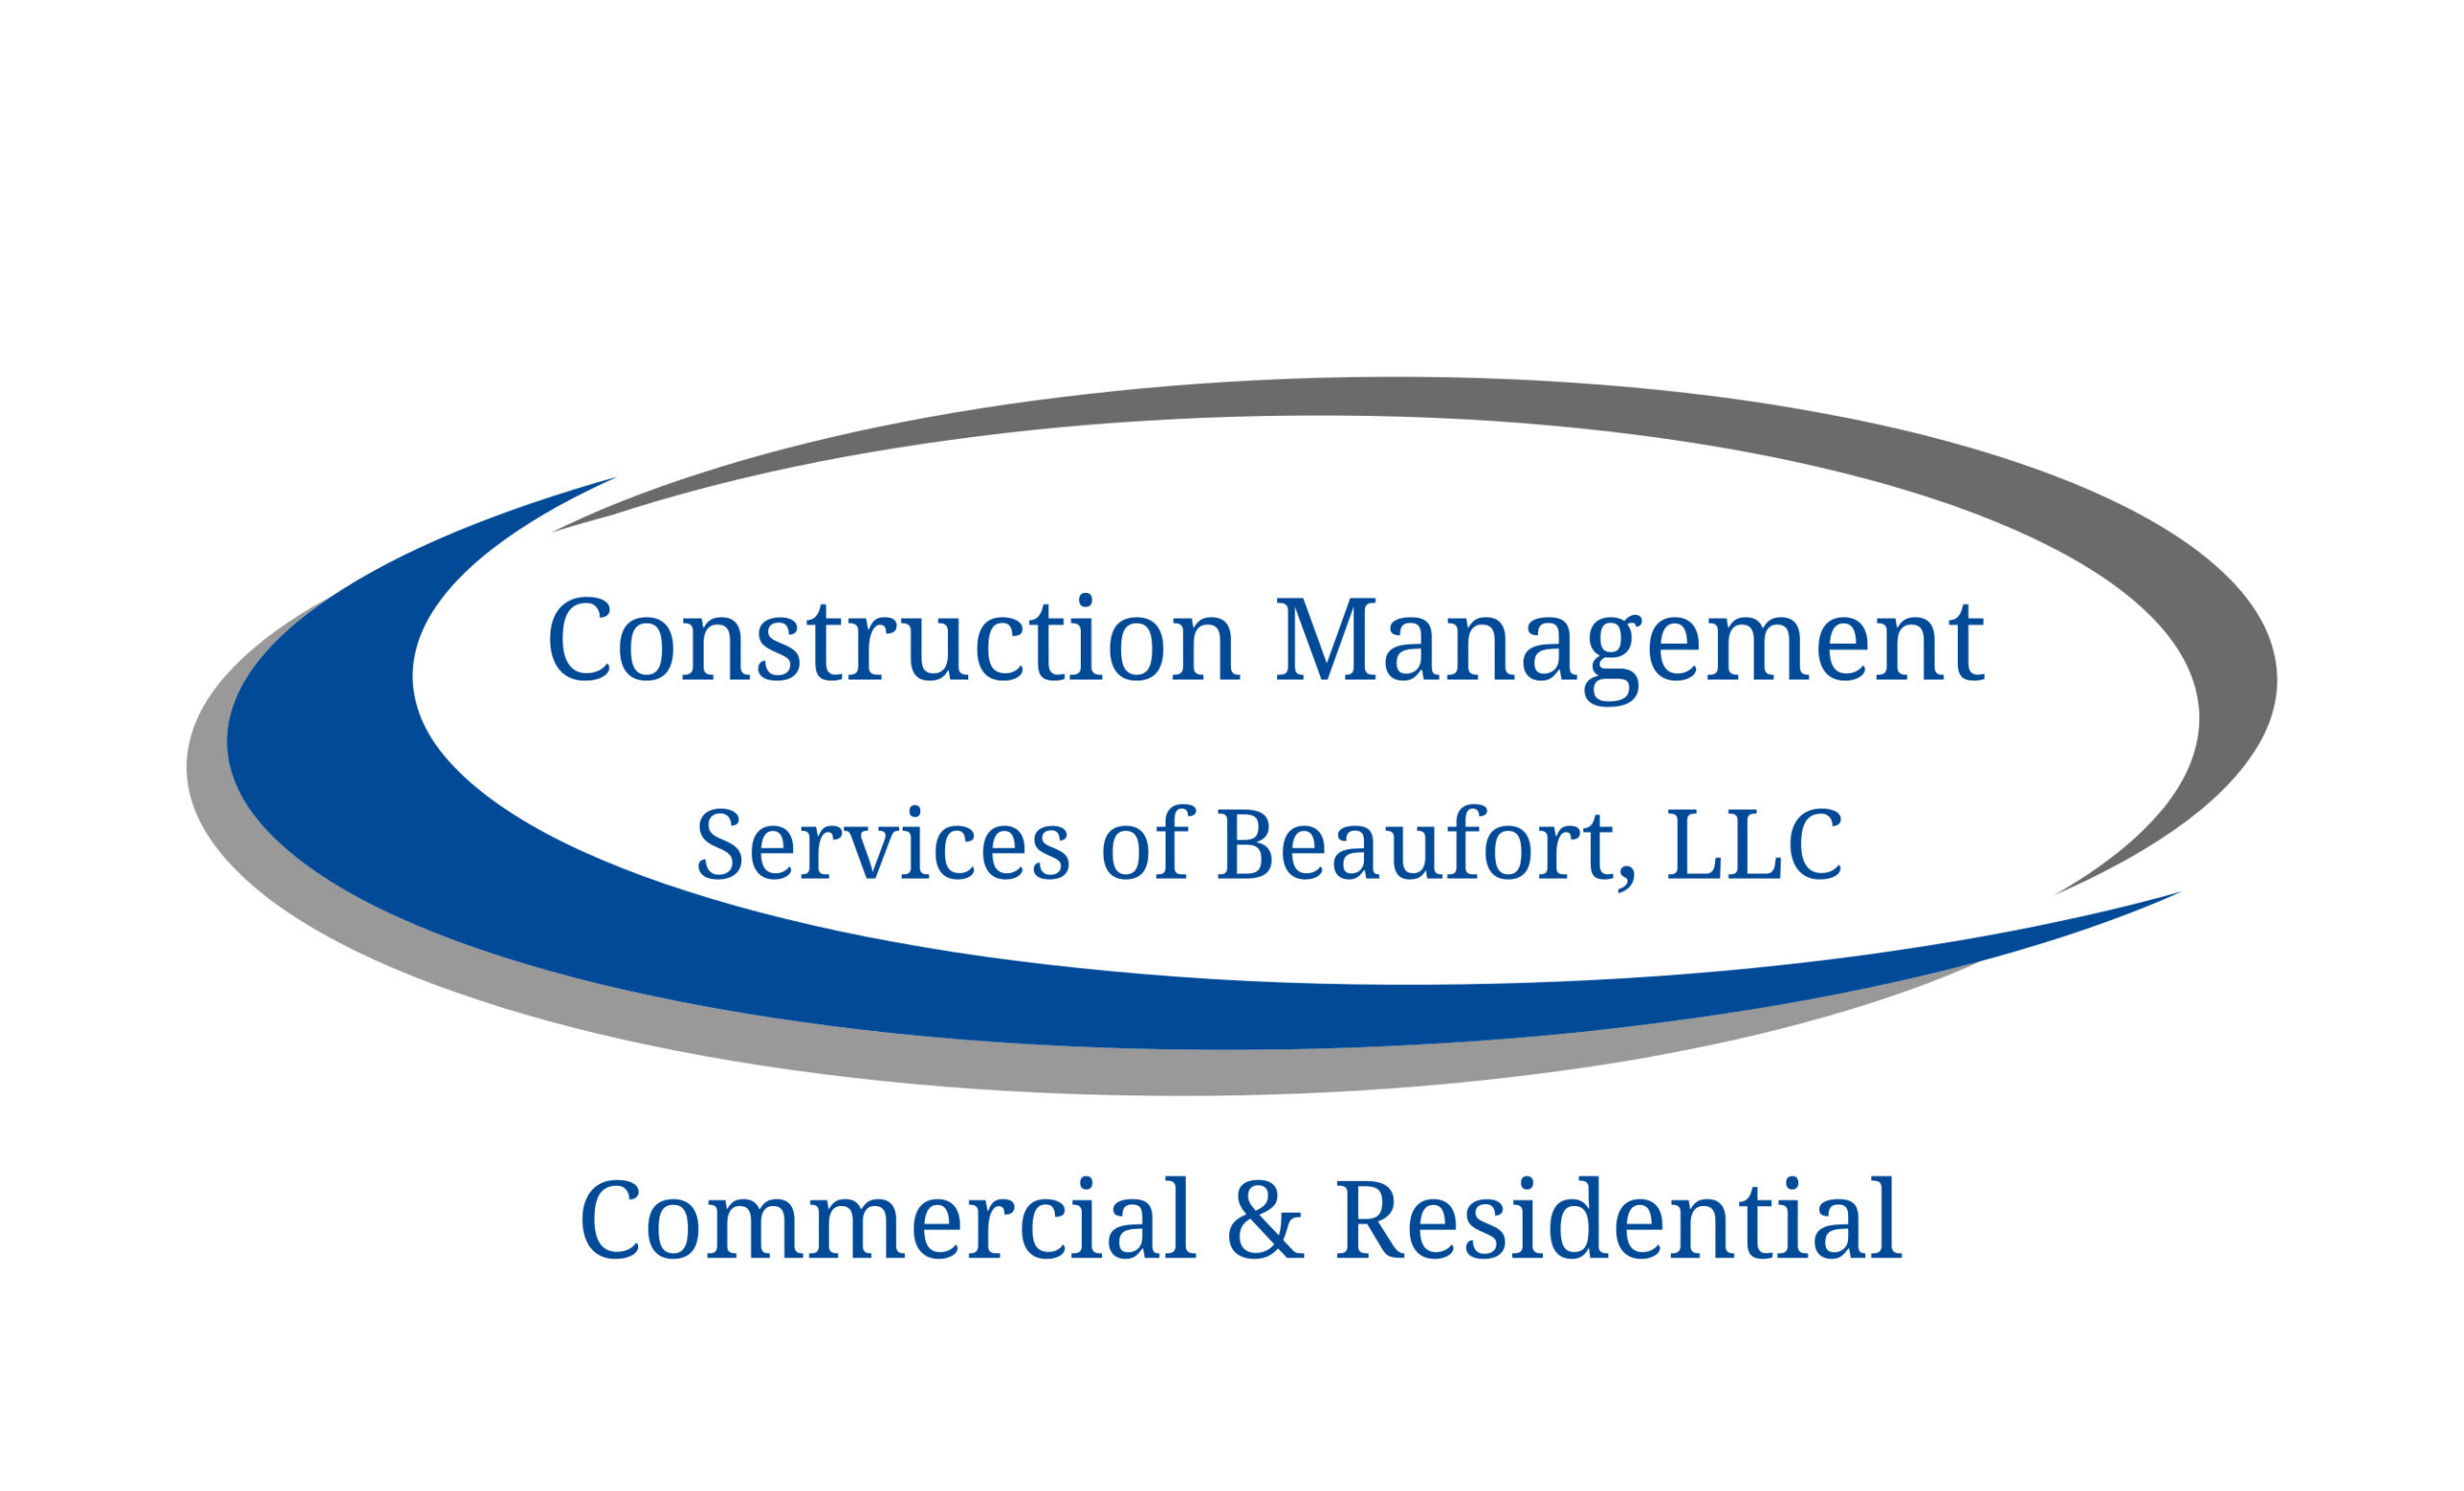 Construction Management Services of Beaufort